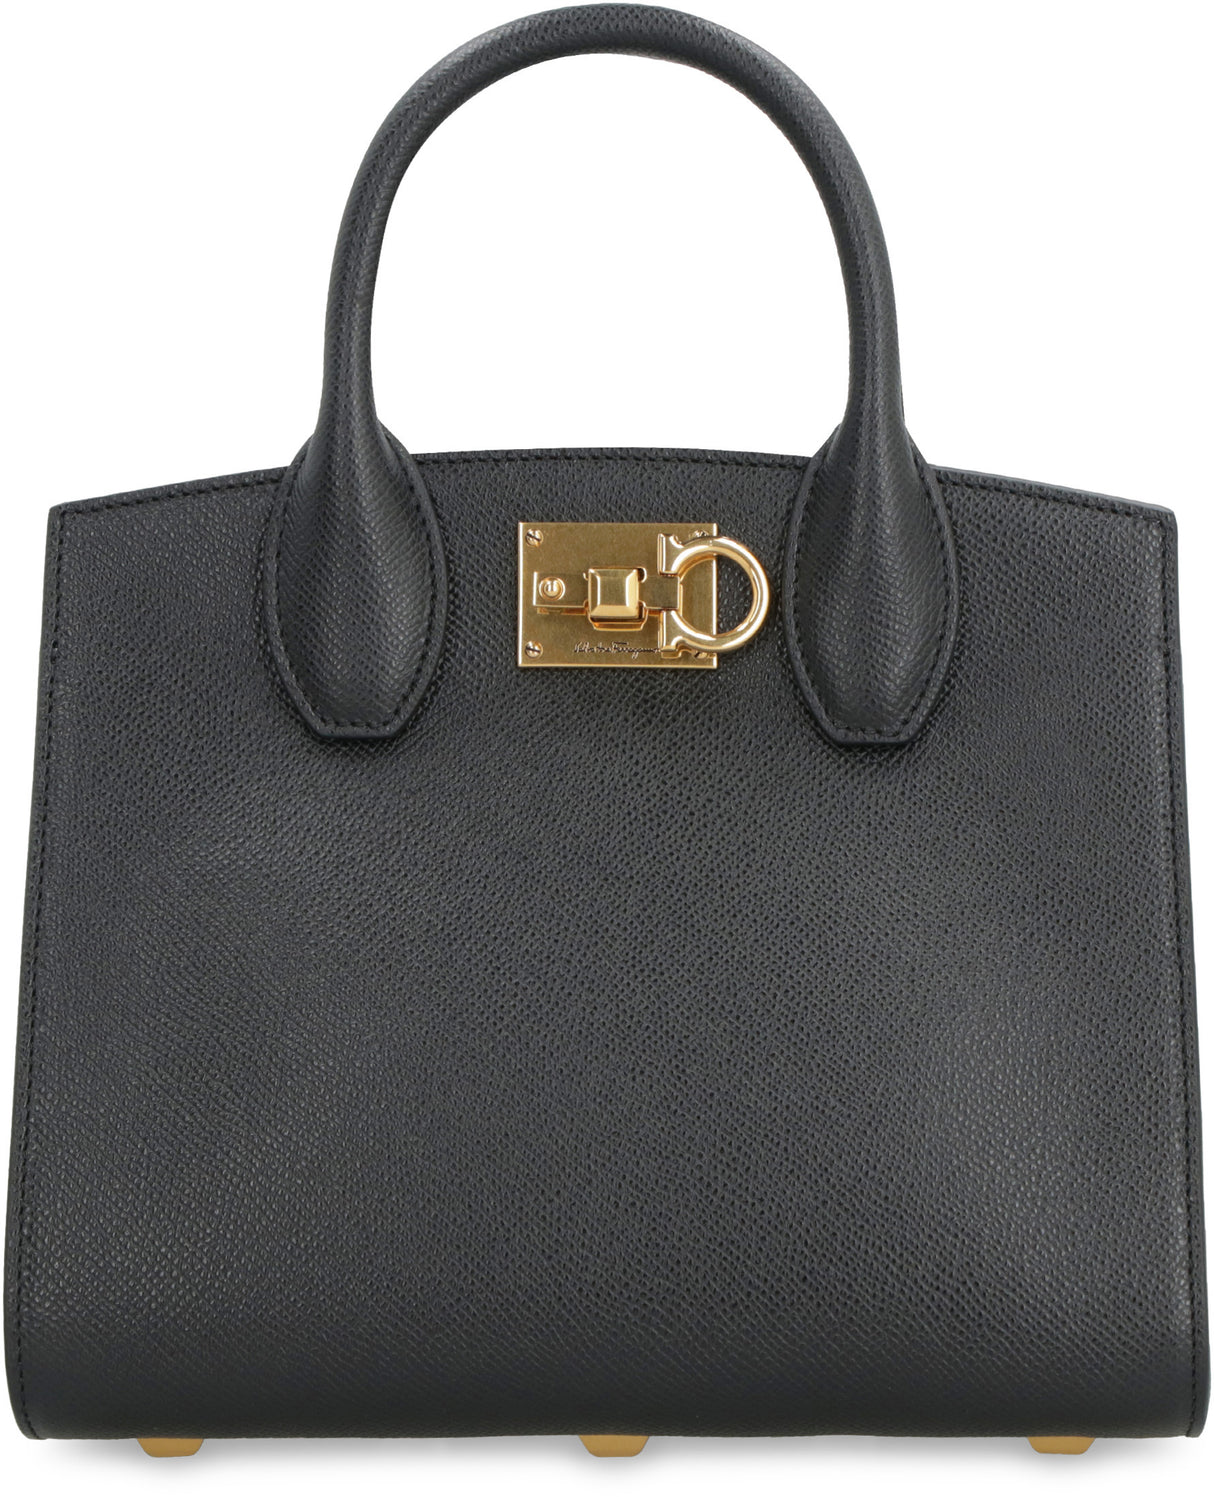 Stylish Black Leather Mini Handbag for Women